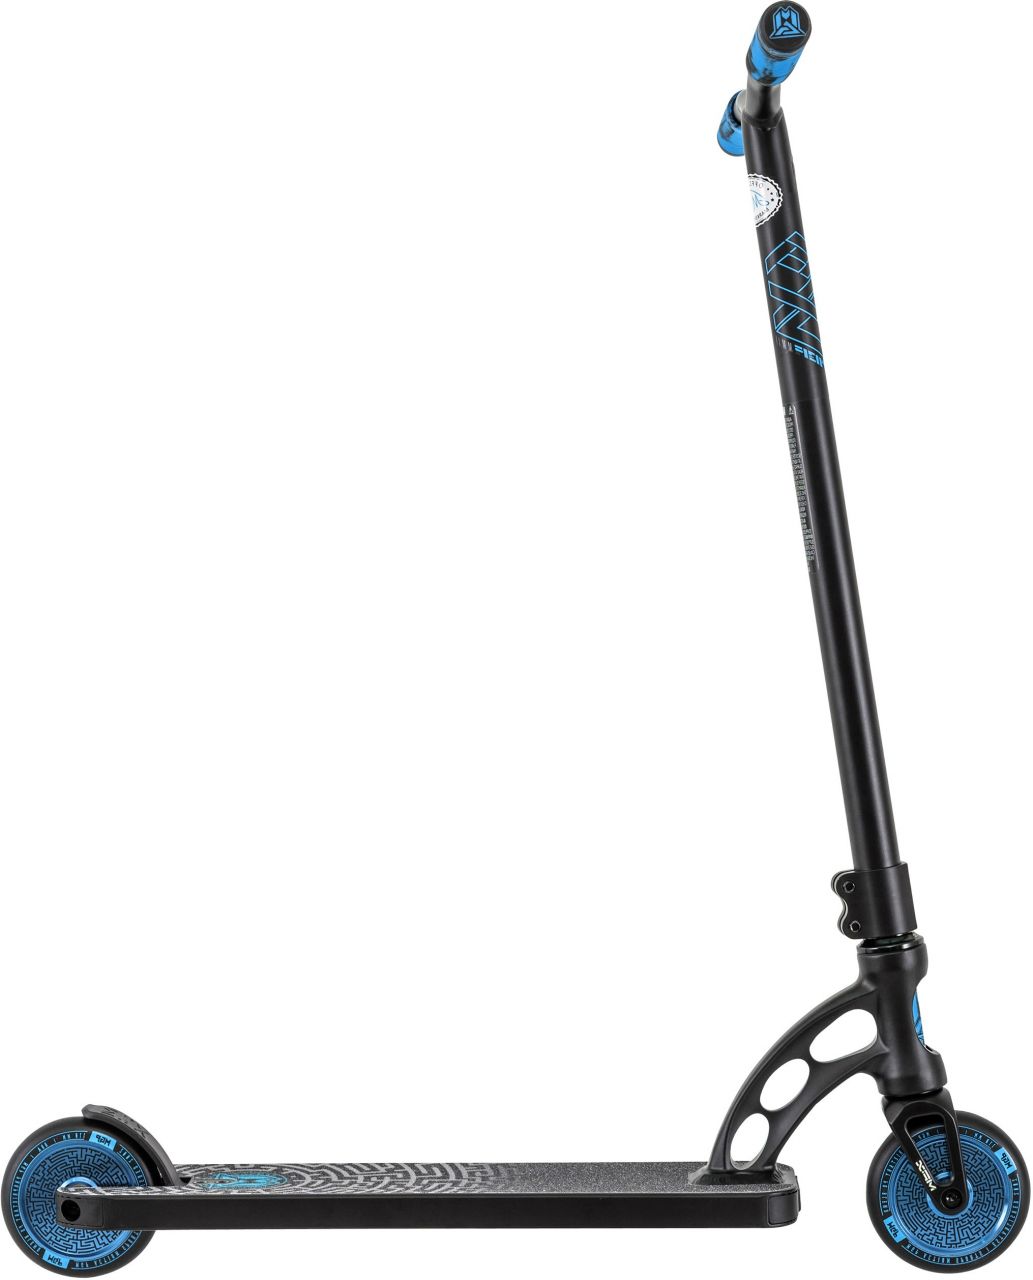 MGP Freestyle Scooter | VX9 Pro Black Out Range | Blau-schwarz